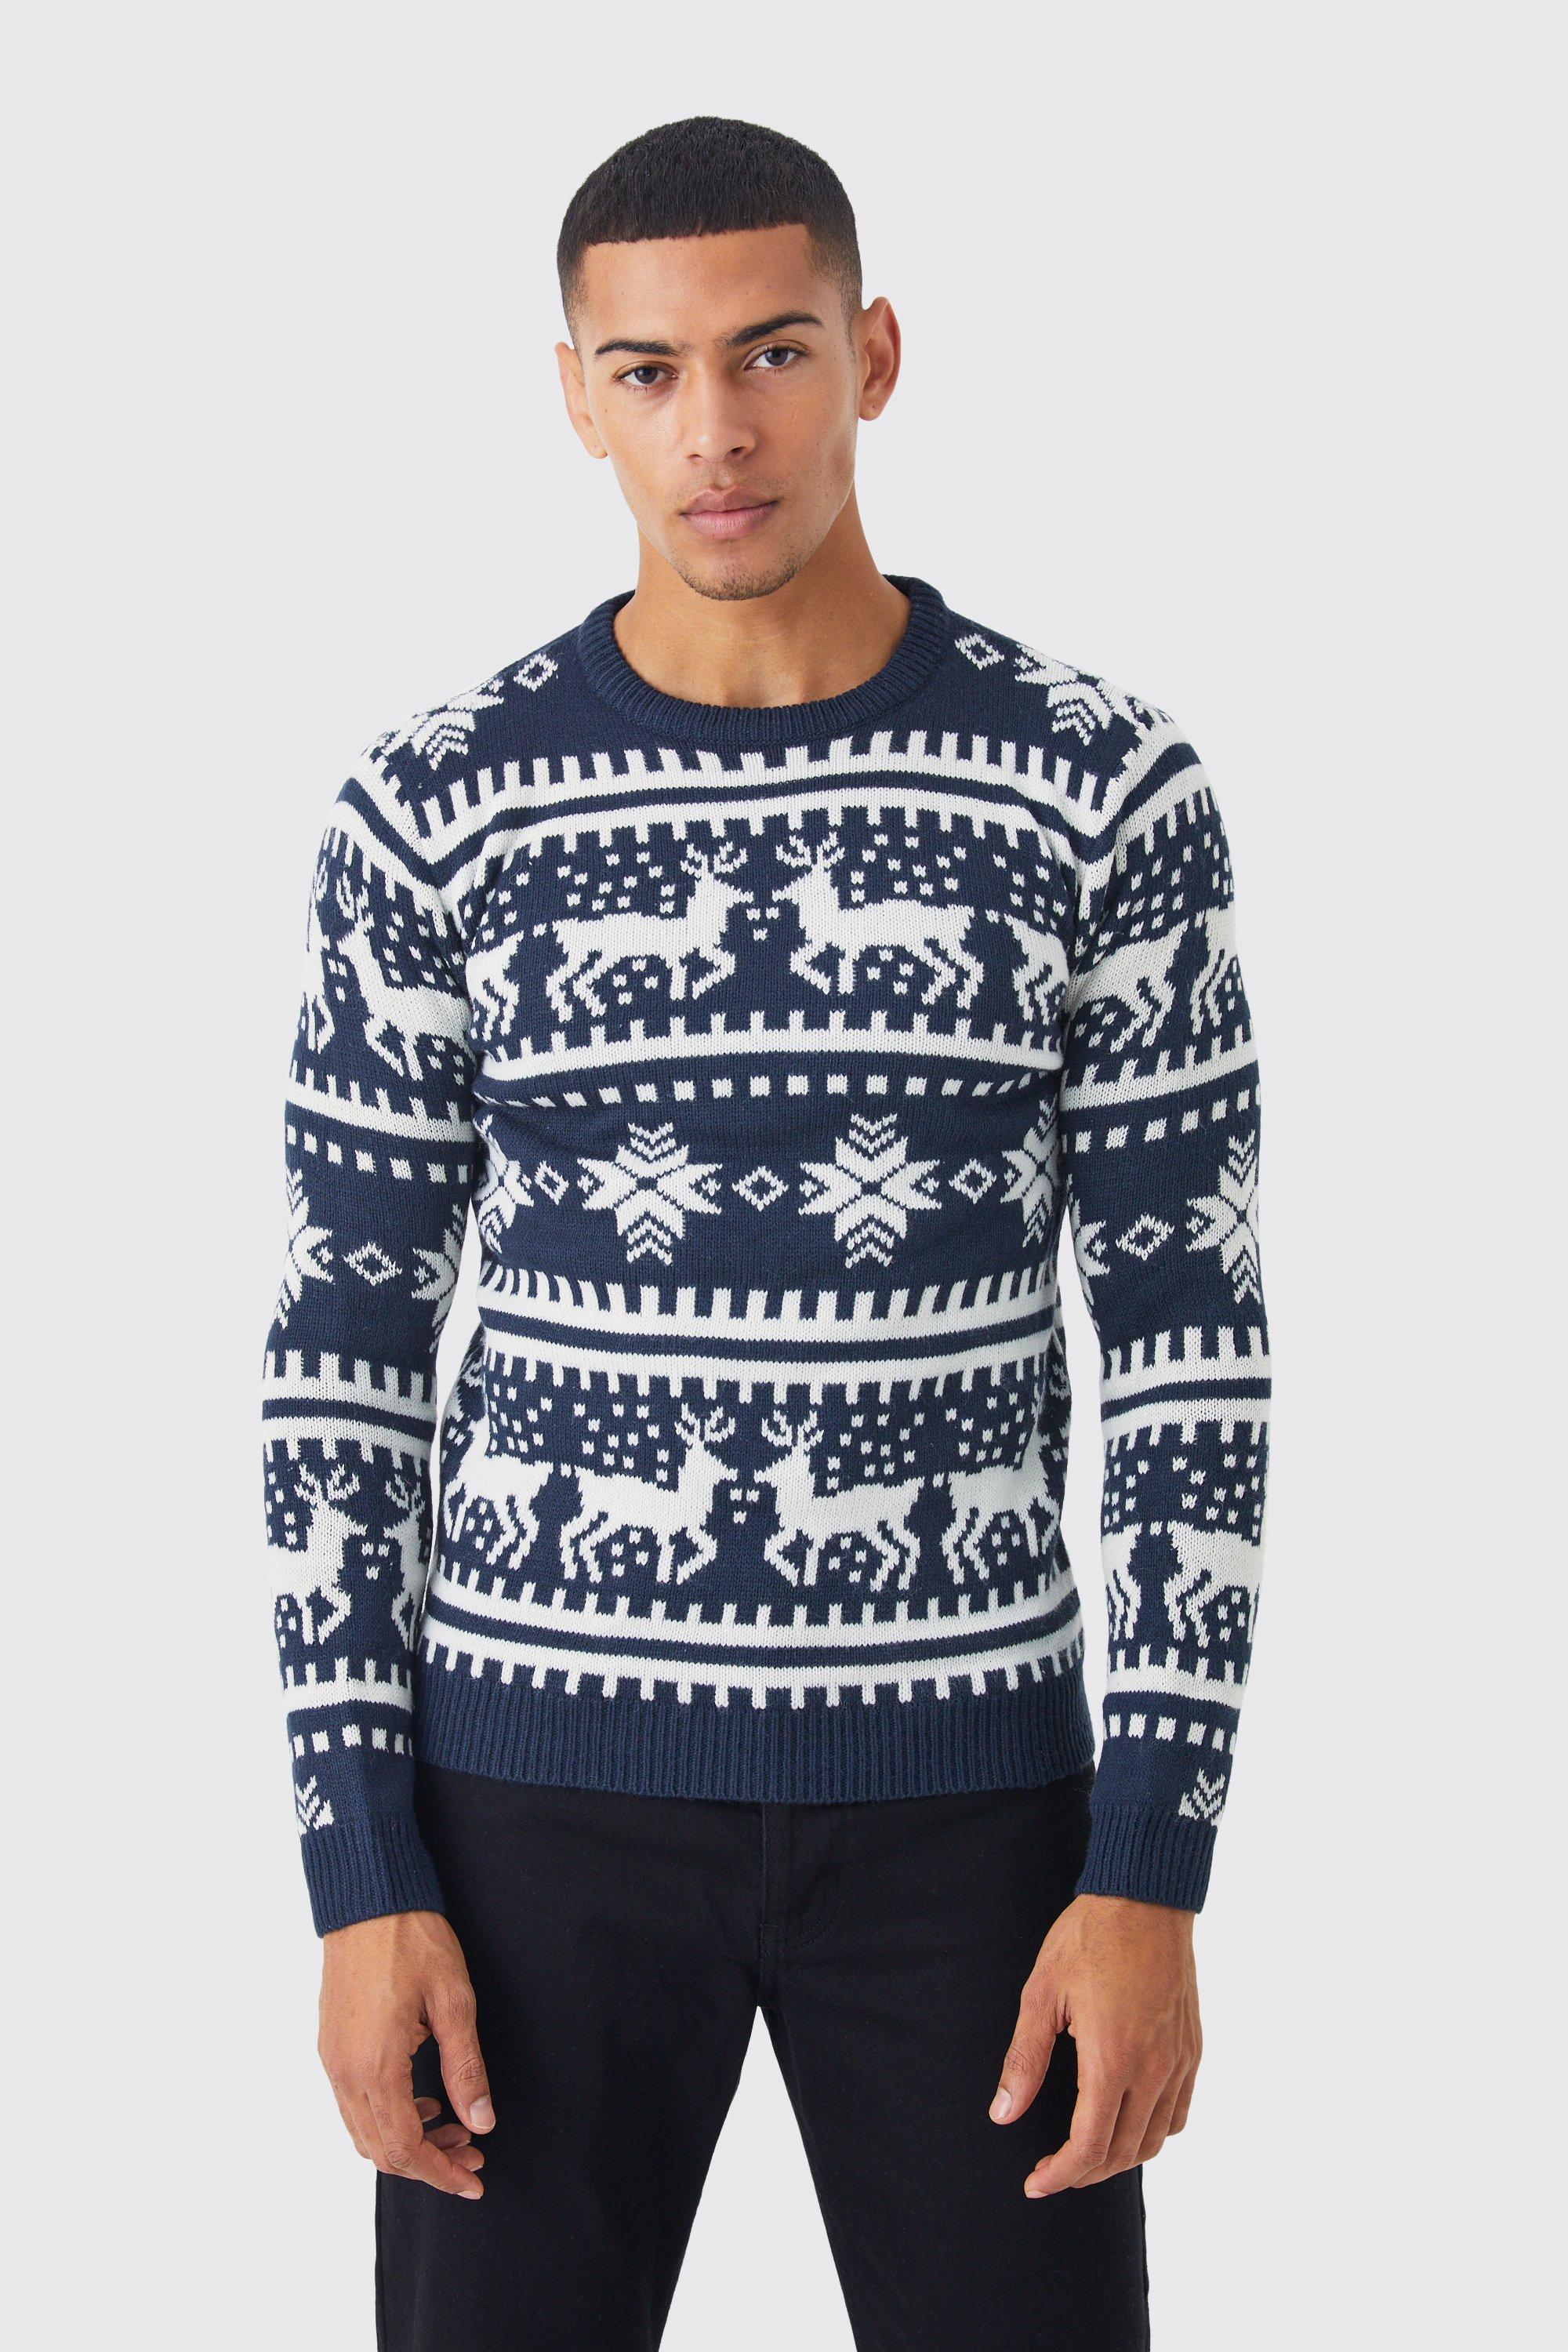 boohooMAN Mens Reindeer Fair Isle Christmas Sweater - Navy - Big & Tall